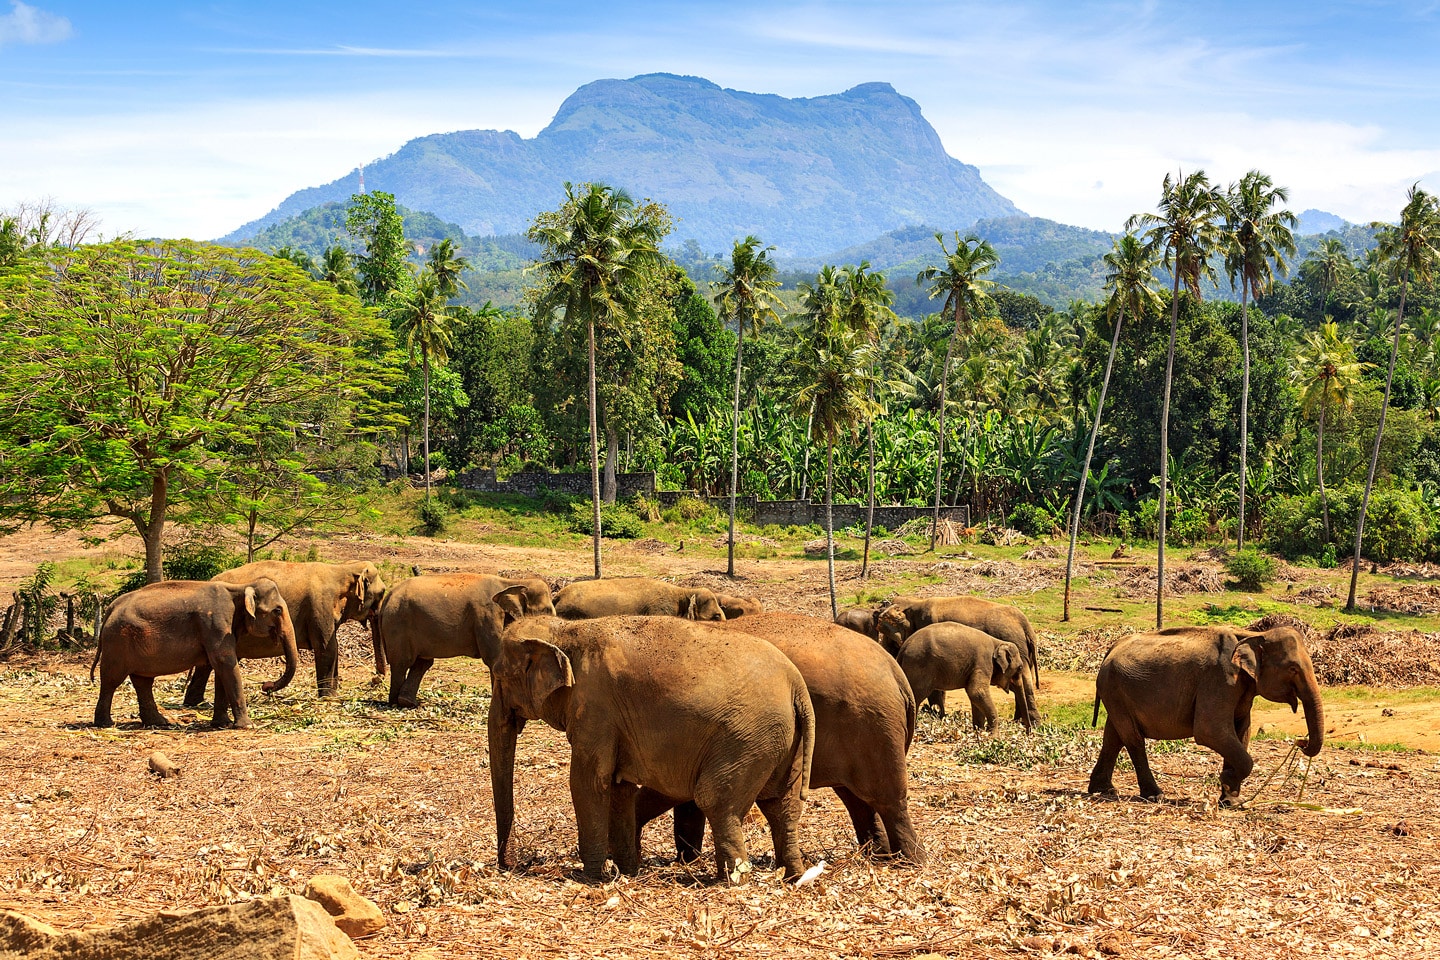 Elephants in Pinawella national park, Sri Lanka